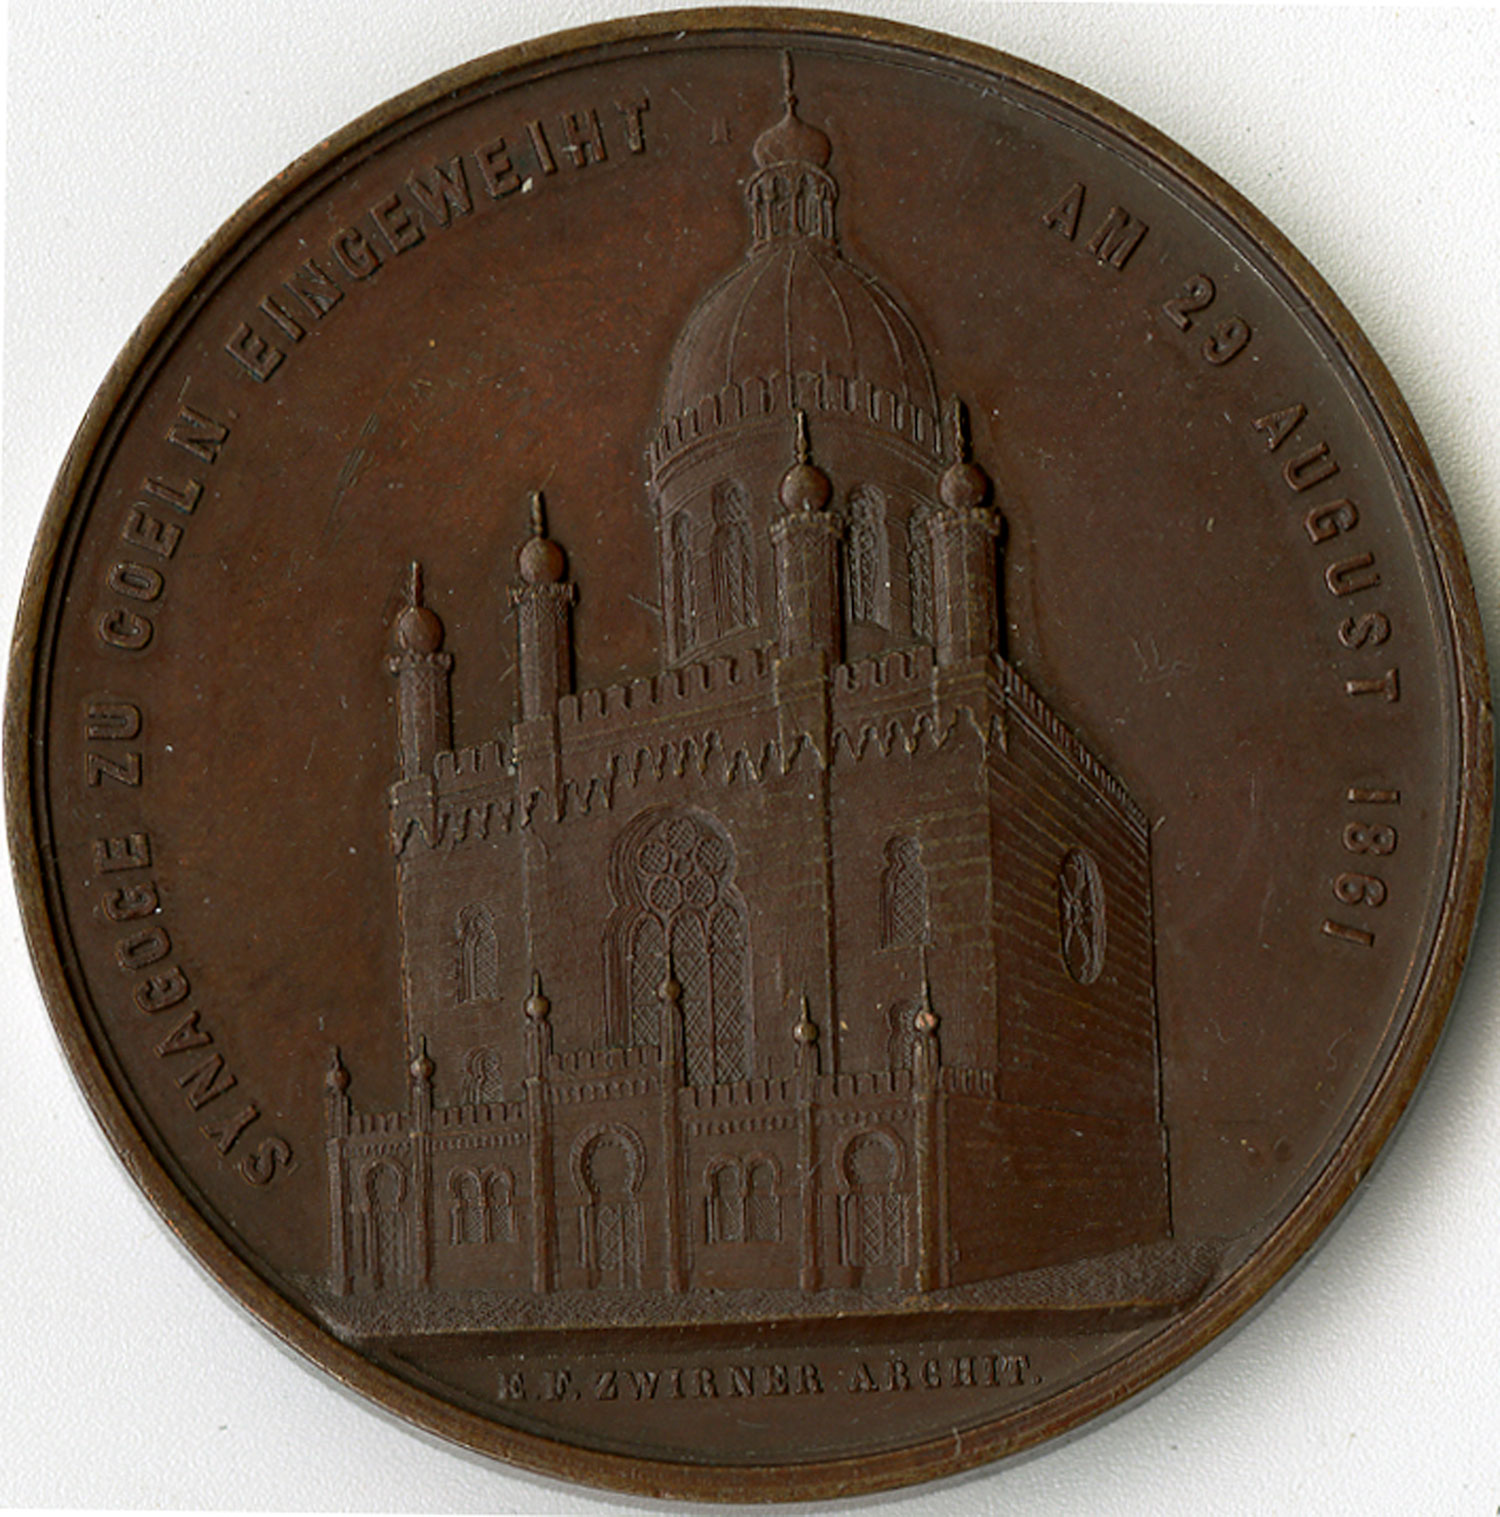 Bronze medal obverse shows synagogue exterior